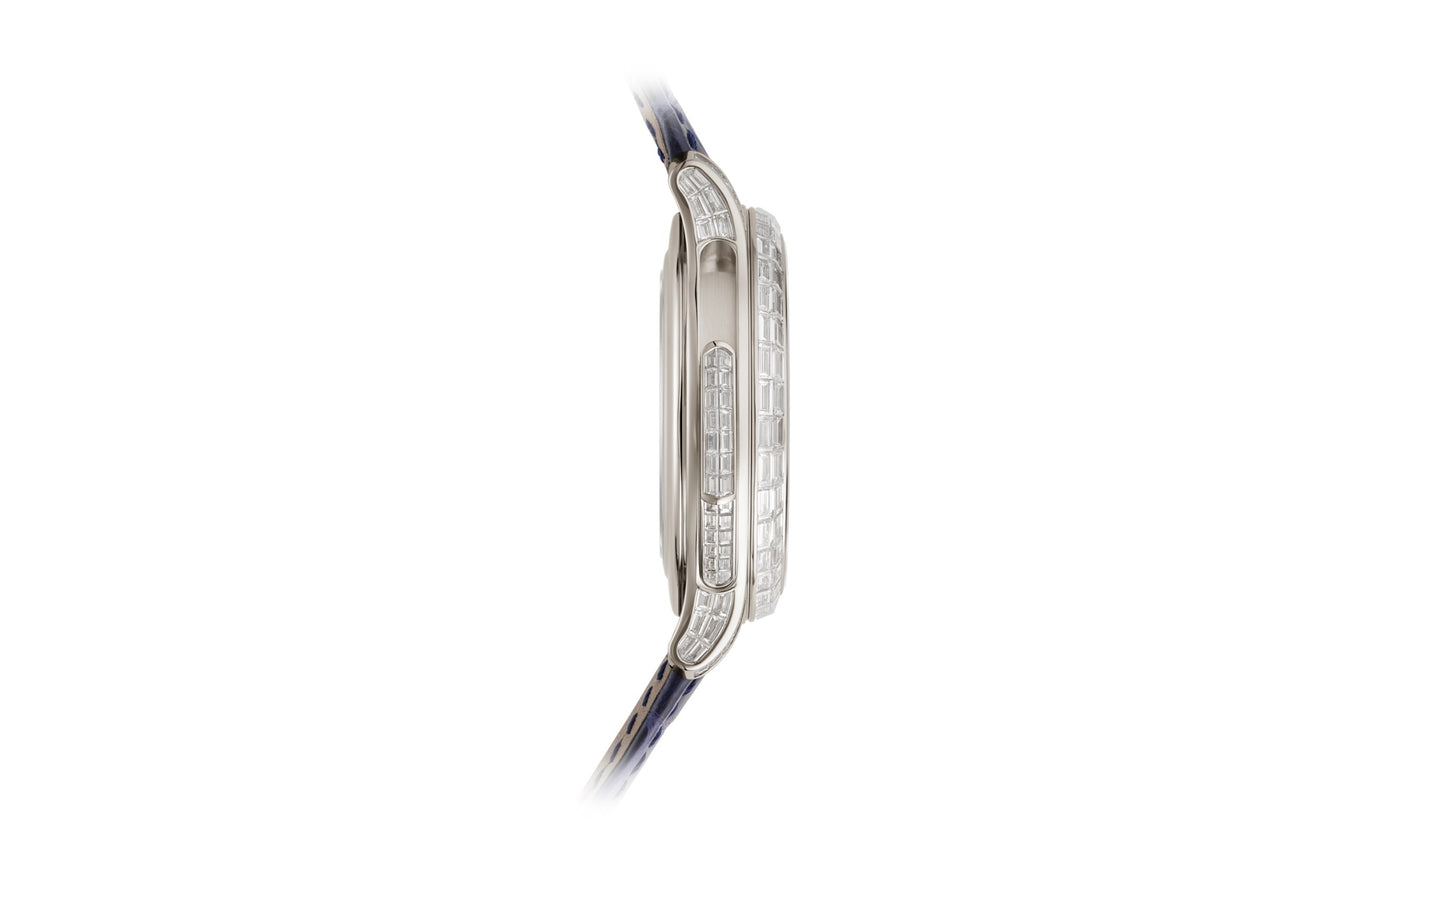 Patek Philippe Grand Complication, Platinum set with baguette diamonds and sapphires, 42mm, Ref# 5374/300P-001, Left